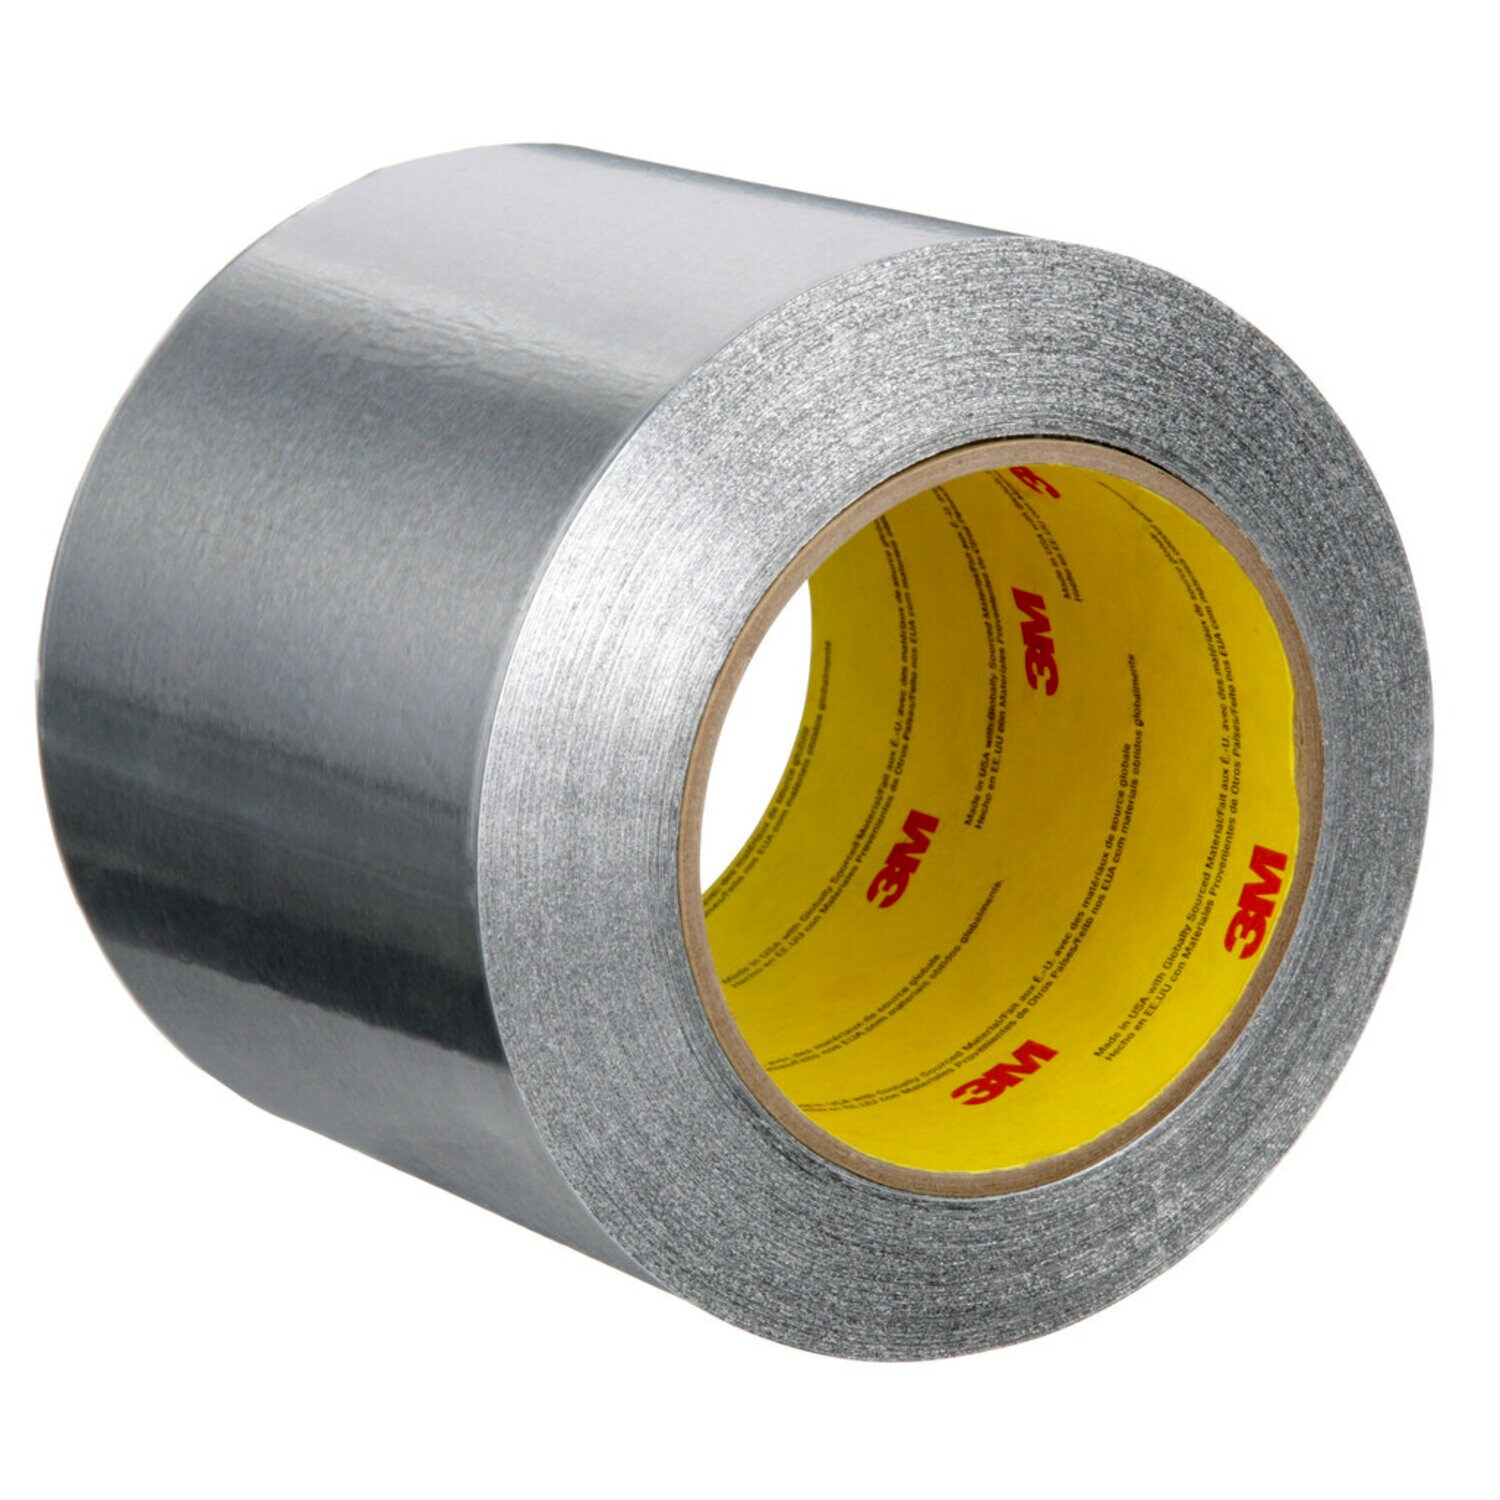 7010379578 - 3M Aluminum Foil Tape 425, Silver, 96 mm x 55 m, 4.6 mil, 12 rolls per
case